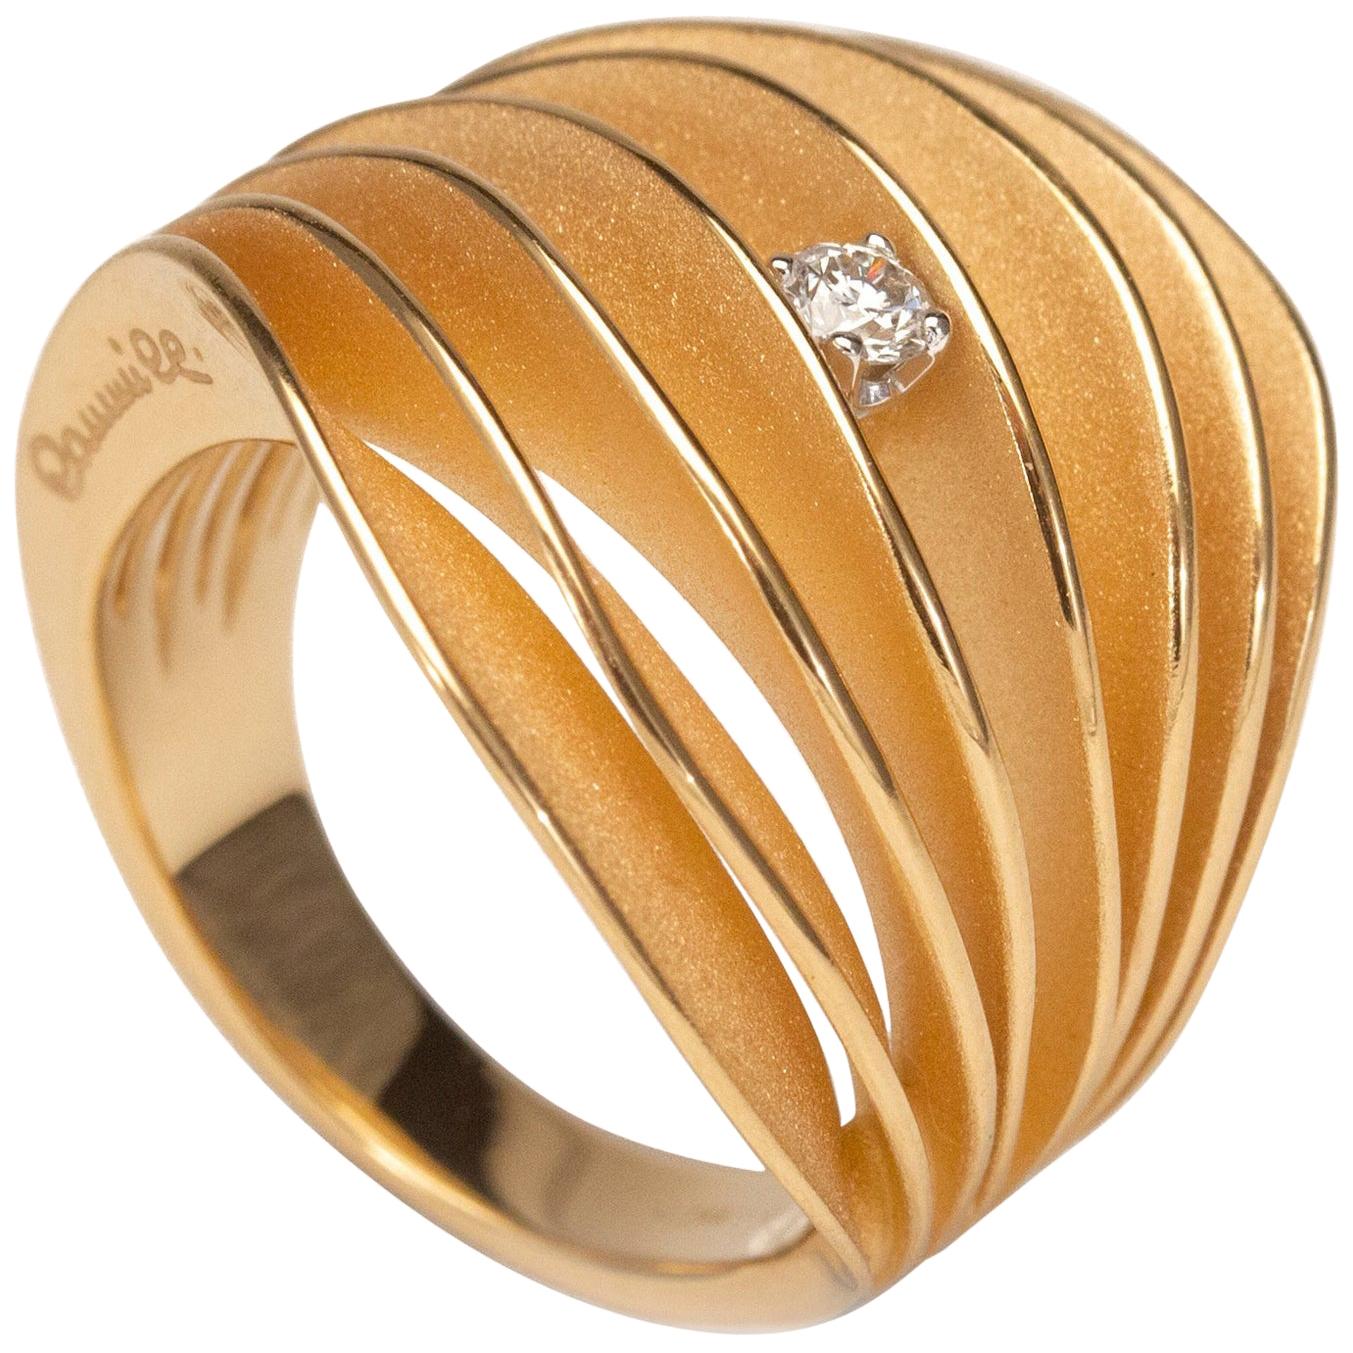 Annamaria Cammilli "Dune Velaa" Ring with Diamond in 18 Karat Apricot Gold